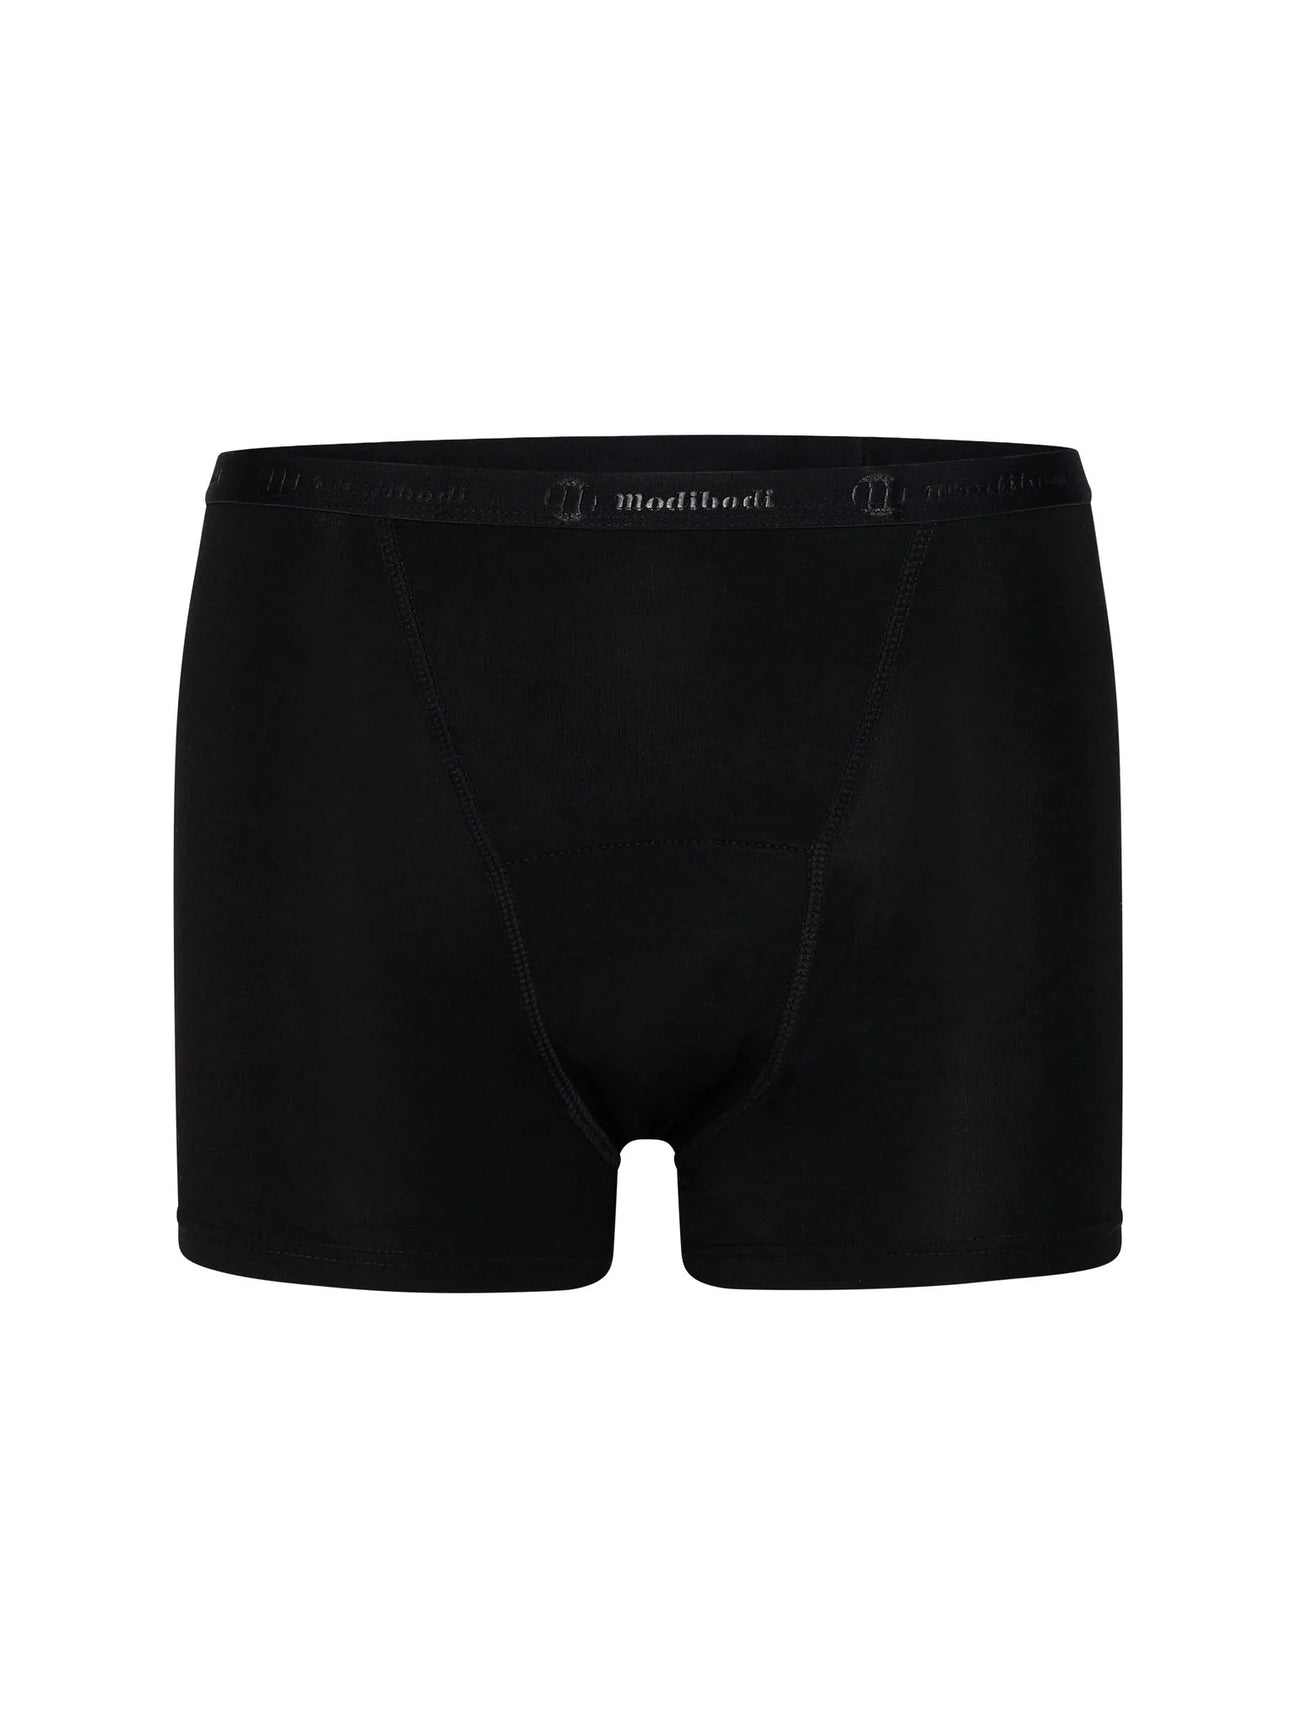 Period Underwear - Adult Classic Boyshort by Modibodi - The